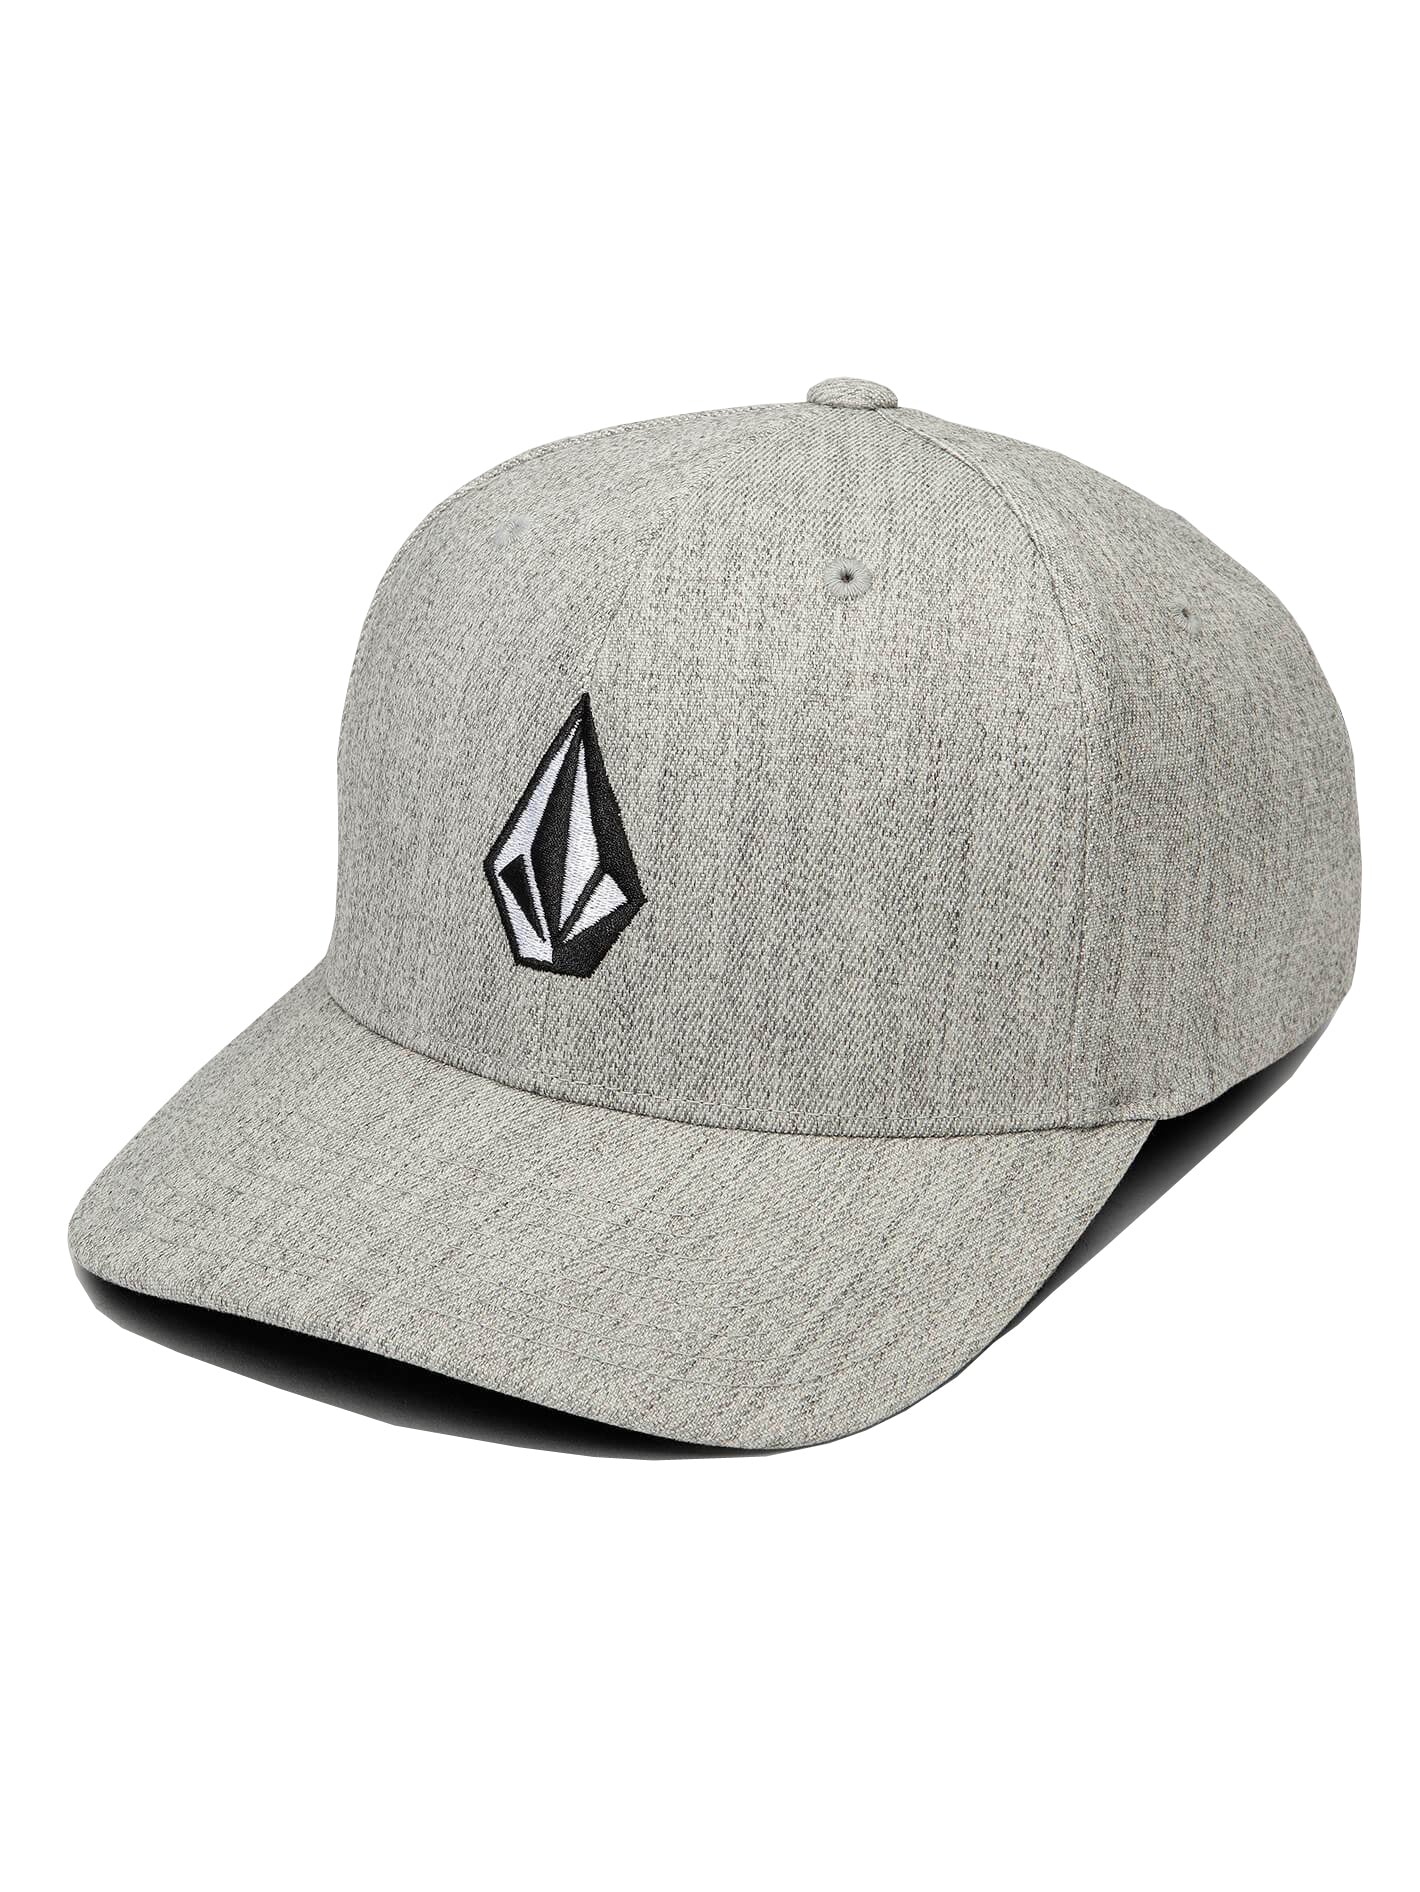 Volcom Full Stone Heather Flex fit Hat GVN-GreyVintage L/XL